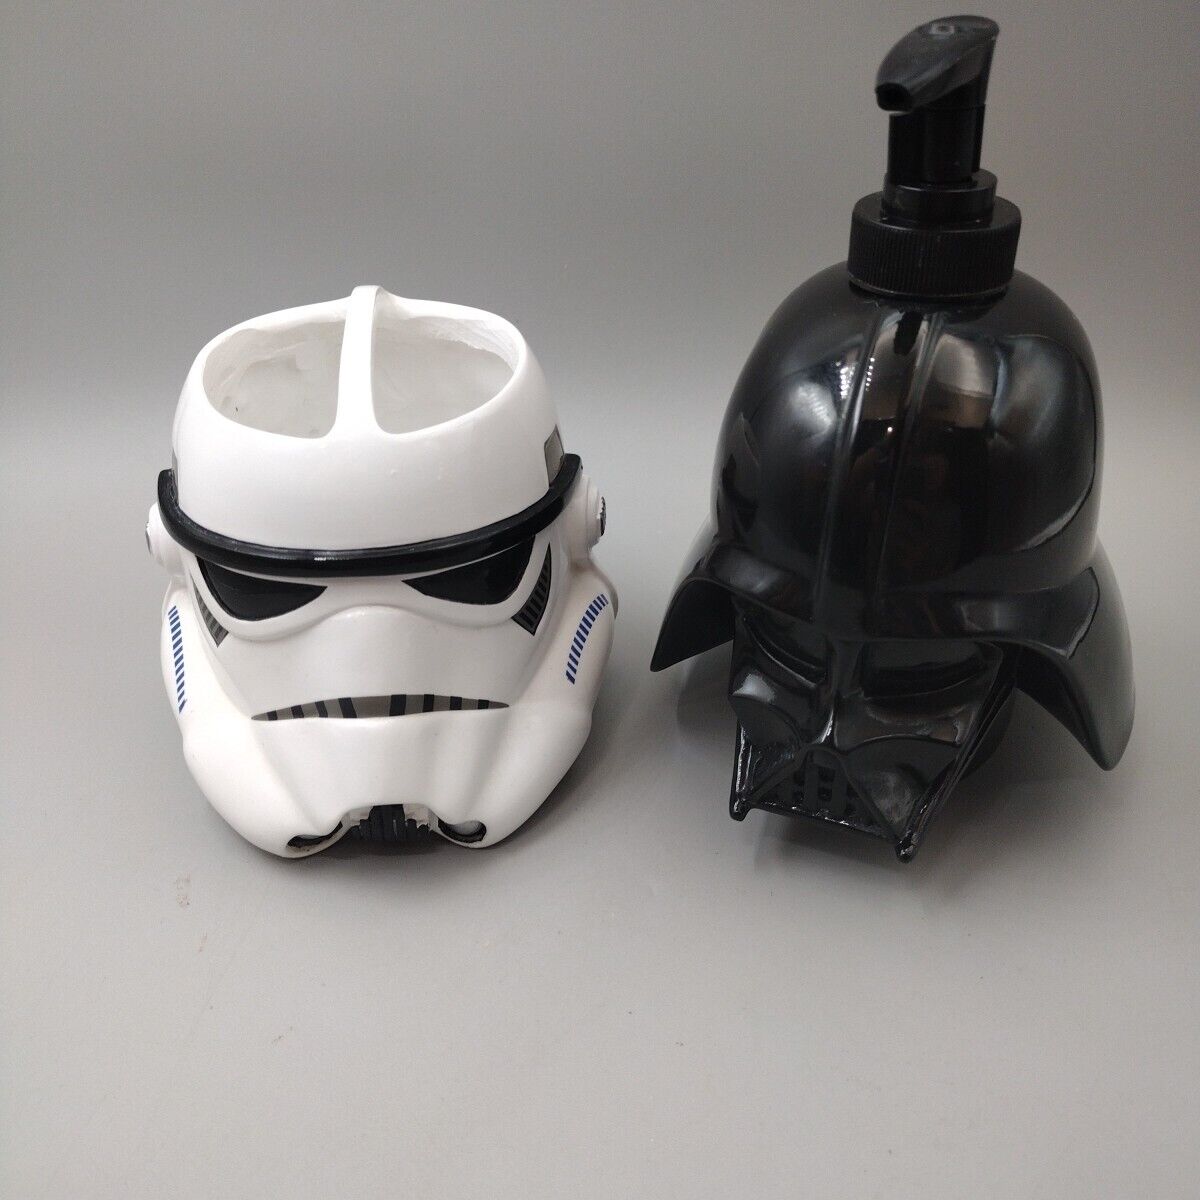 Star Wars Darth Vader Soap Dispenser Stormtrooper Toothbrush Holder Bath Set Kid